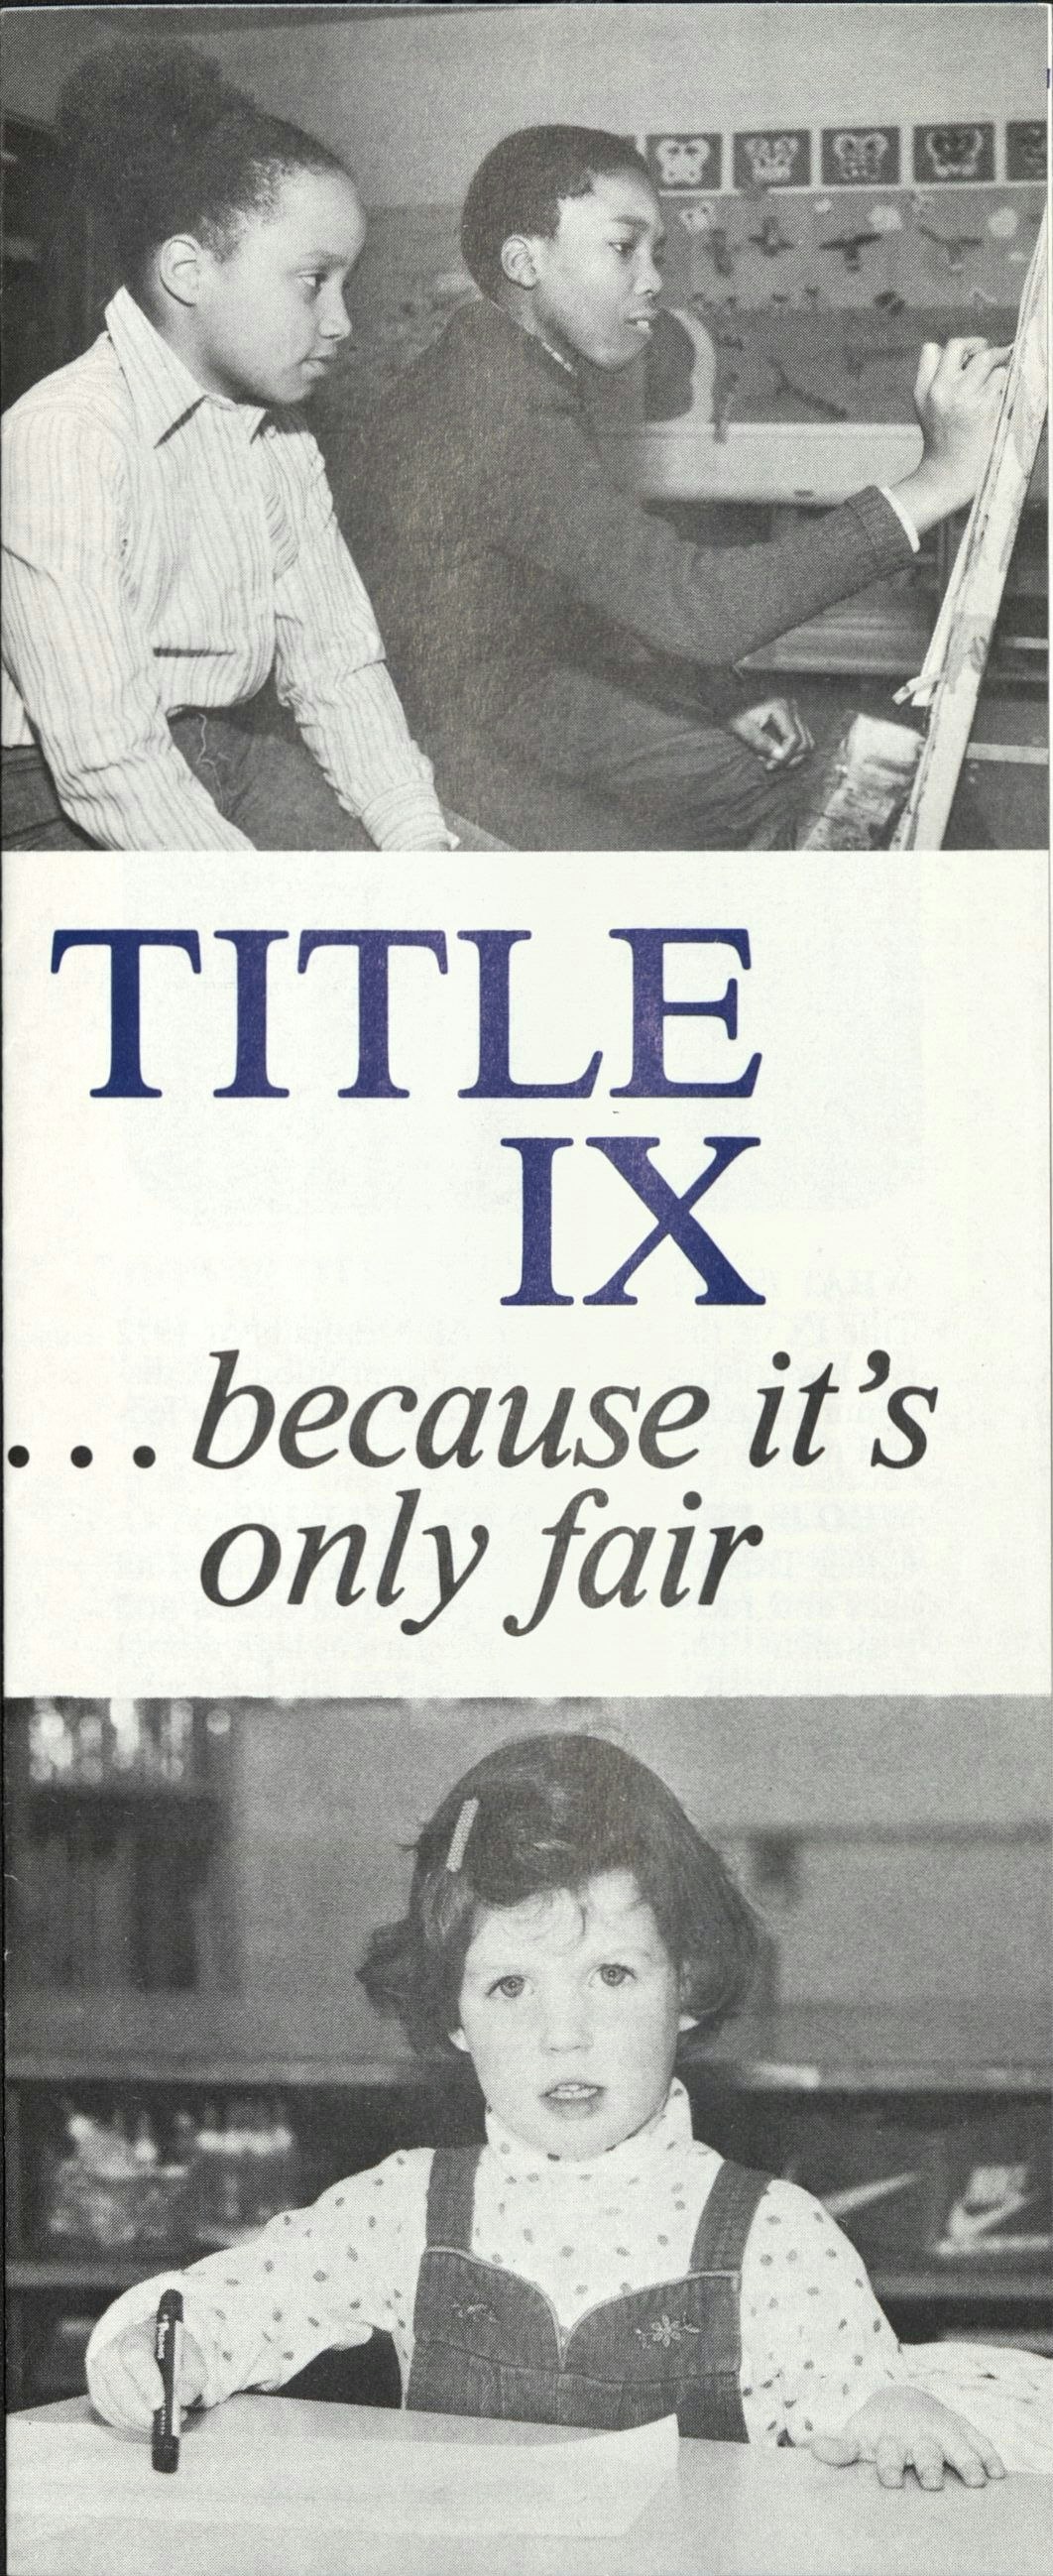 Brochure on Title IX